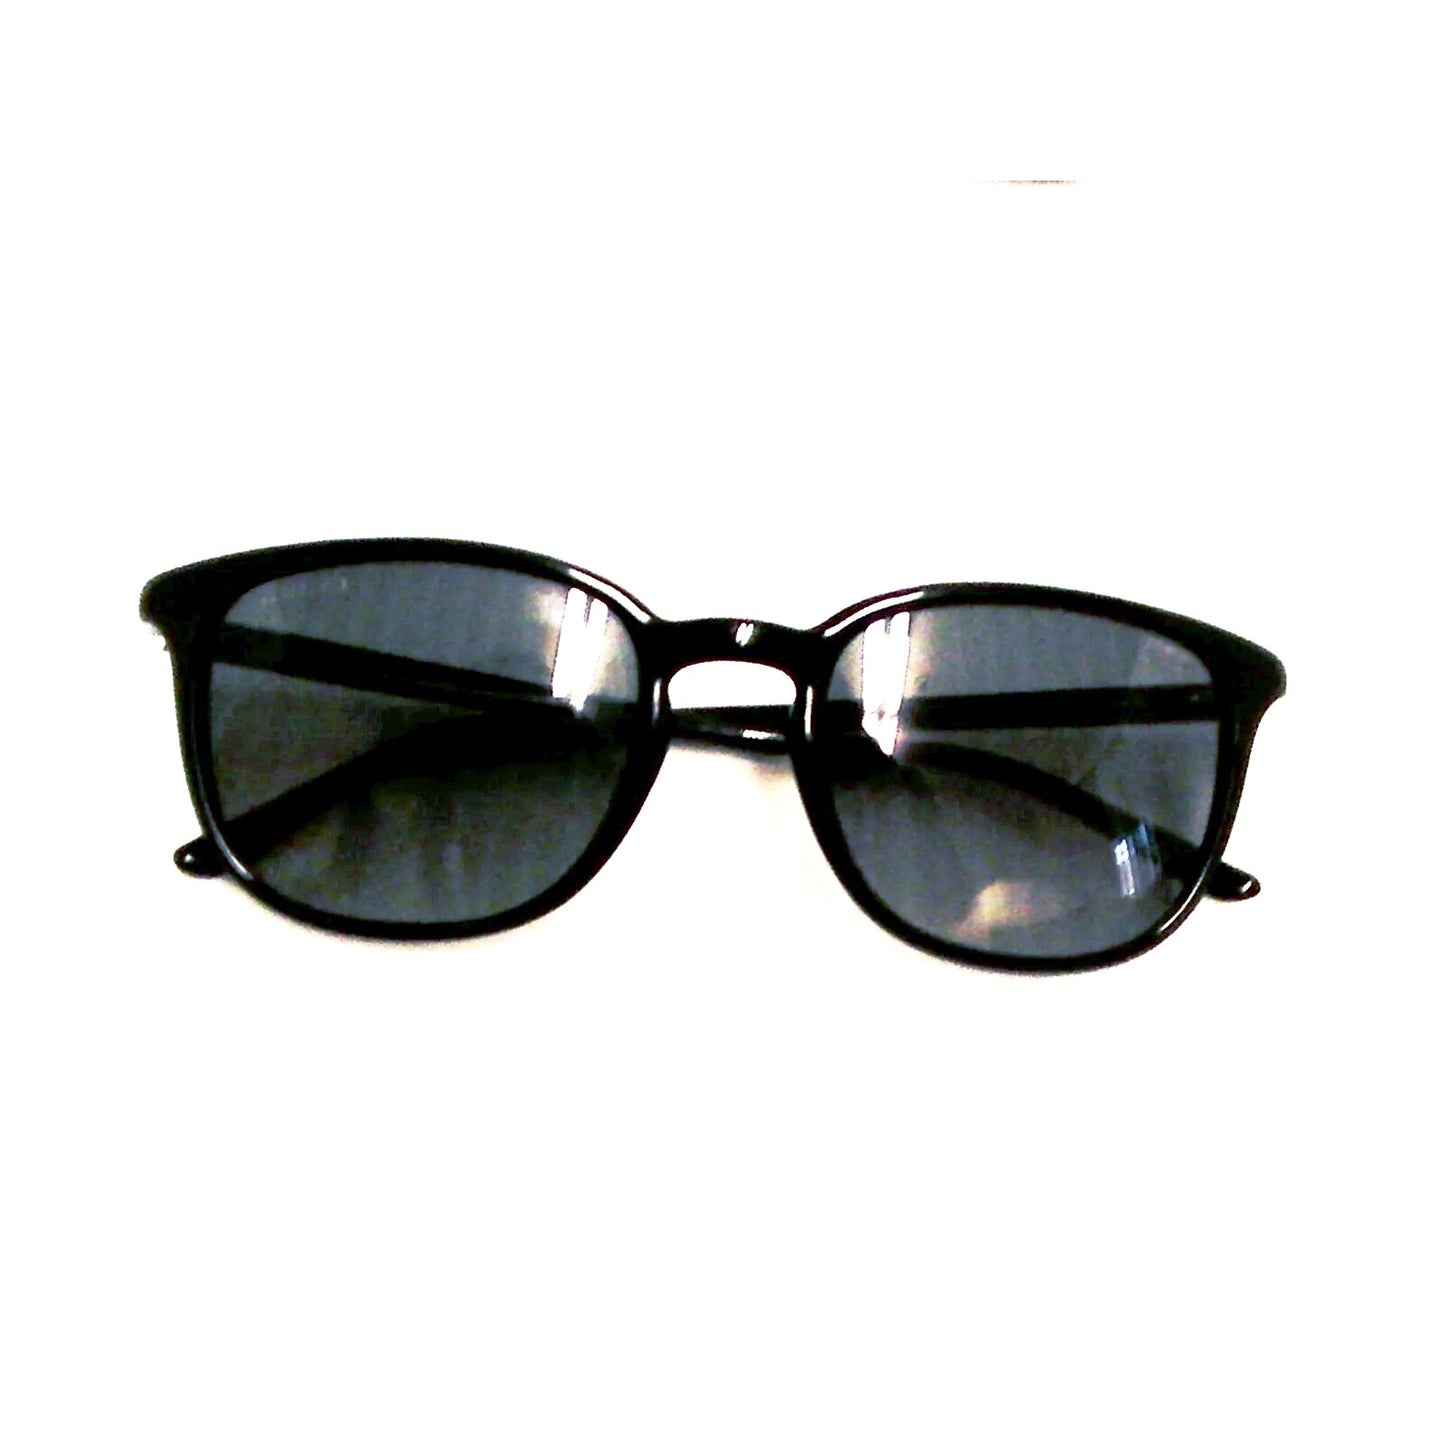 Gucci new Sunglasses GG 1067/s GVJWJ Polarized gray lenses black frame